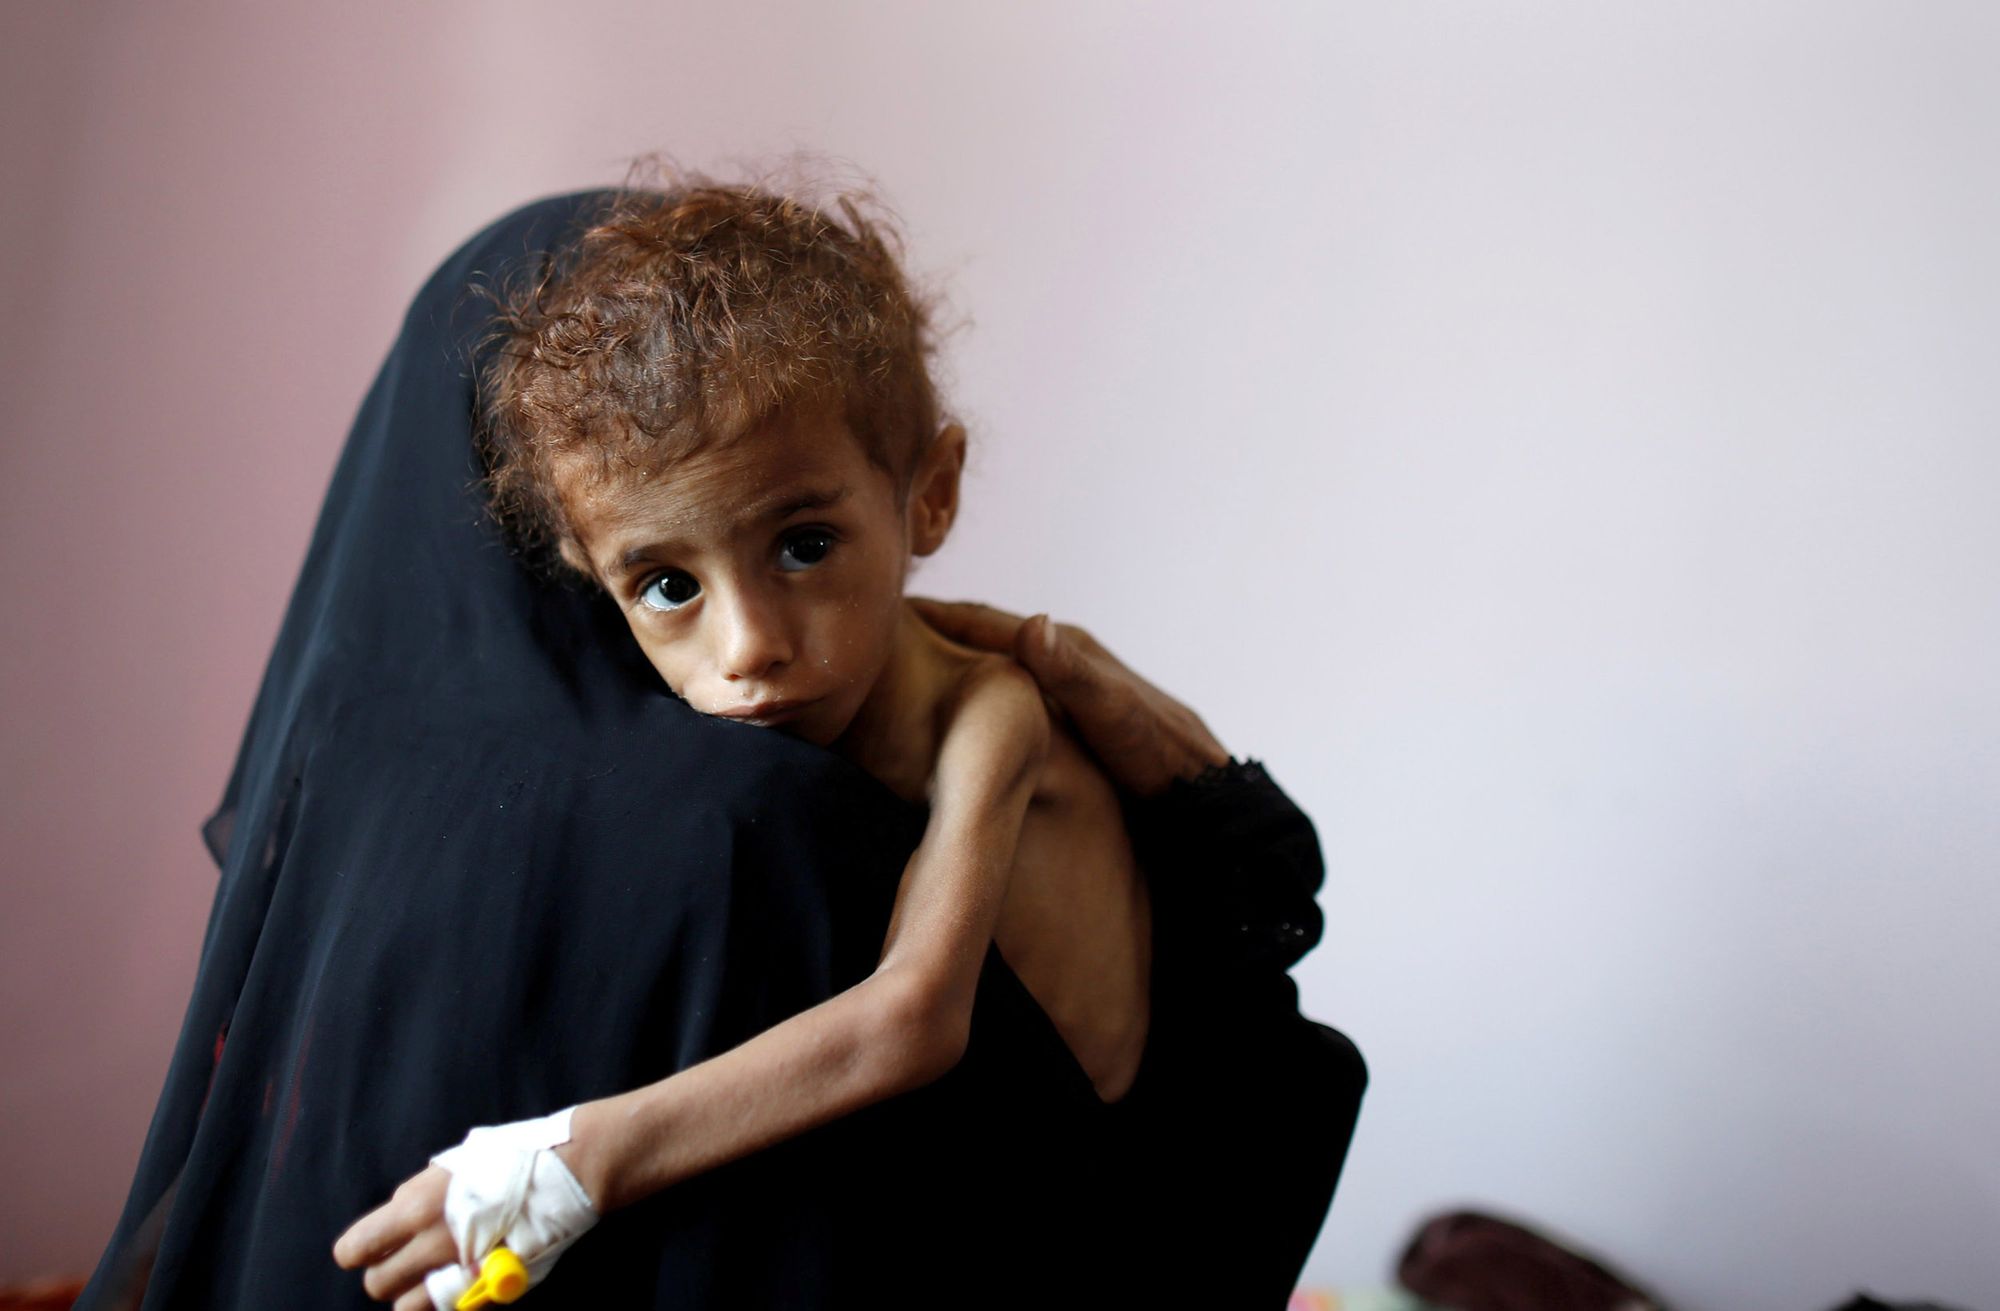 The Yemen Crisis - Worst in the World